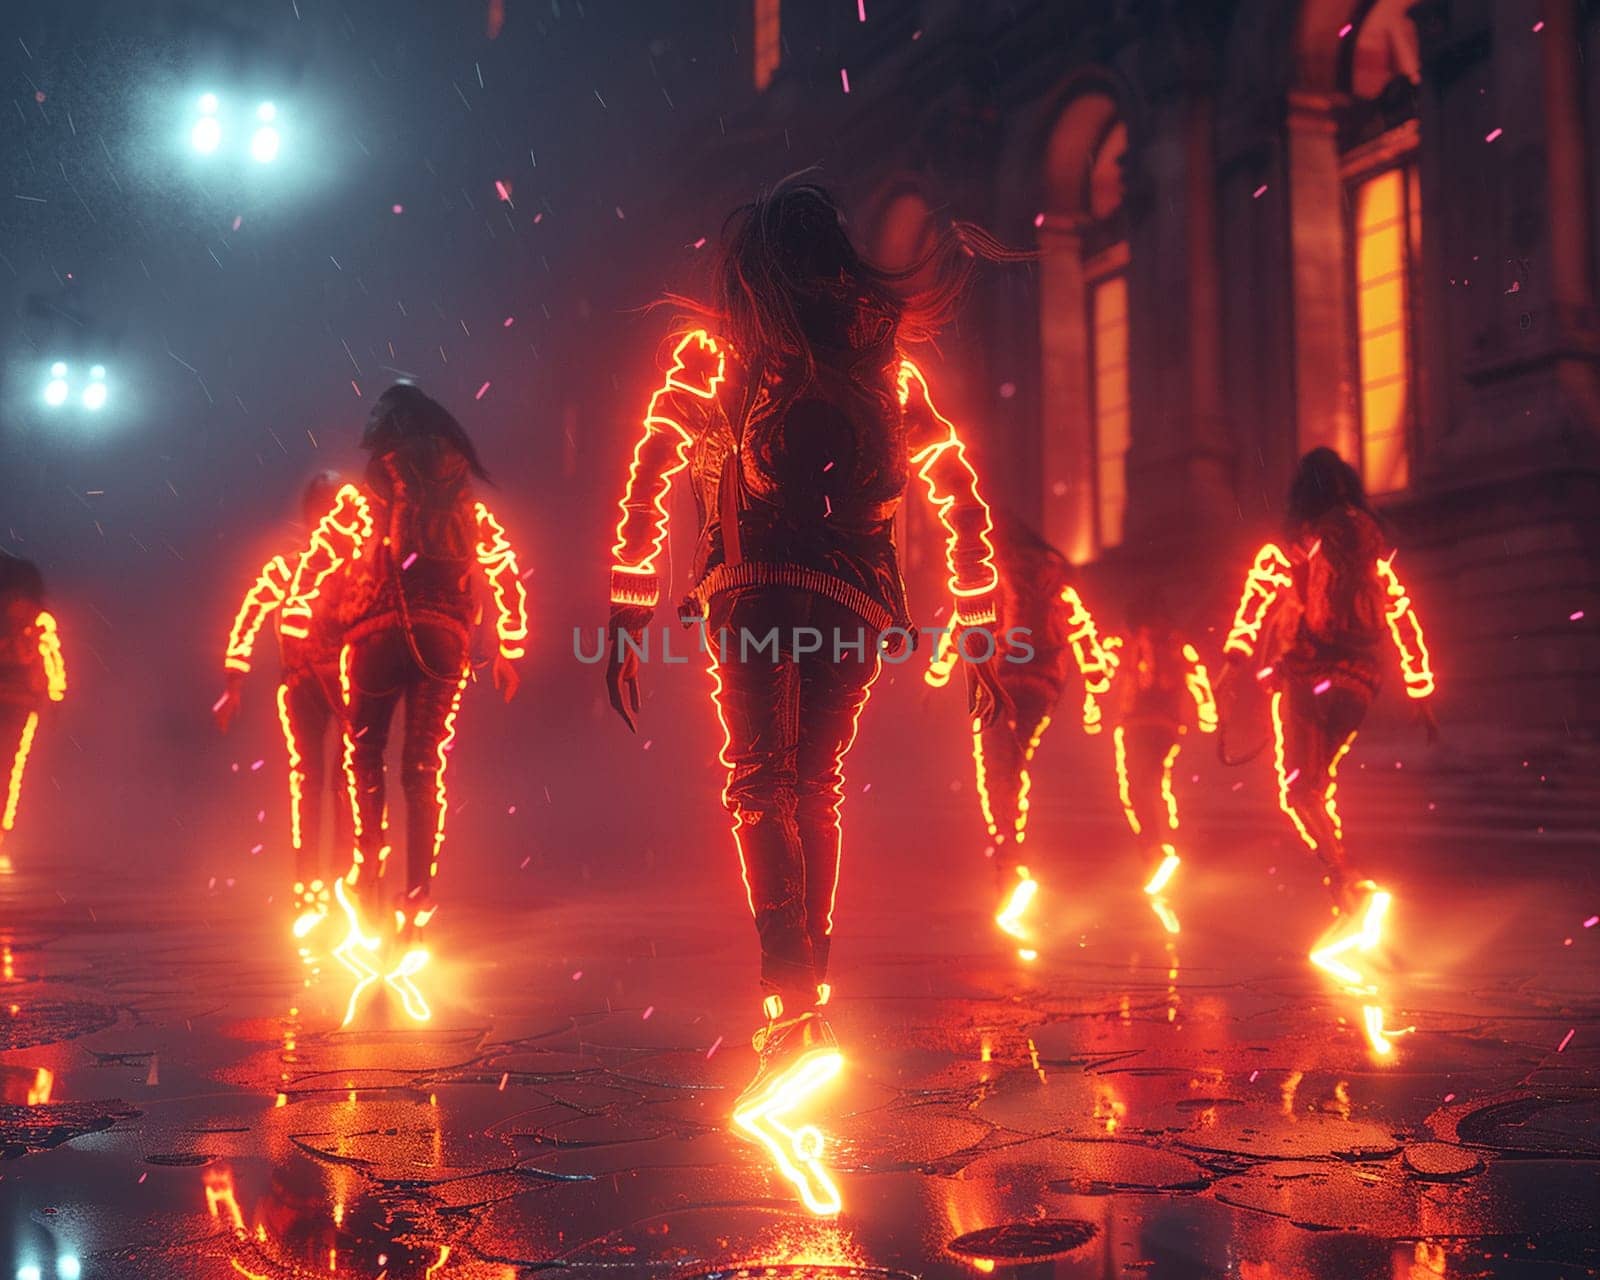 Neon-lit digital artwork of futuristic dance party celebrating Martisor.